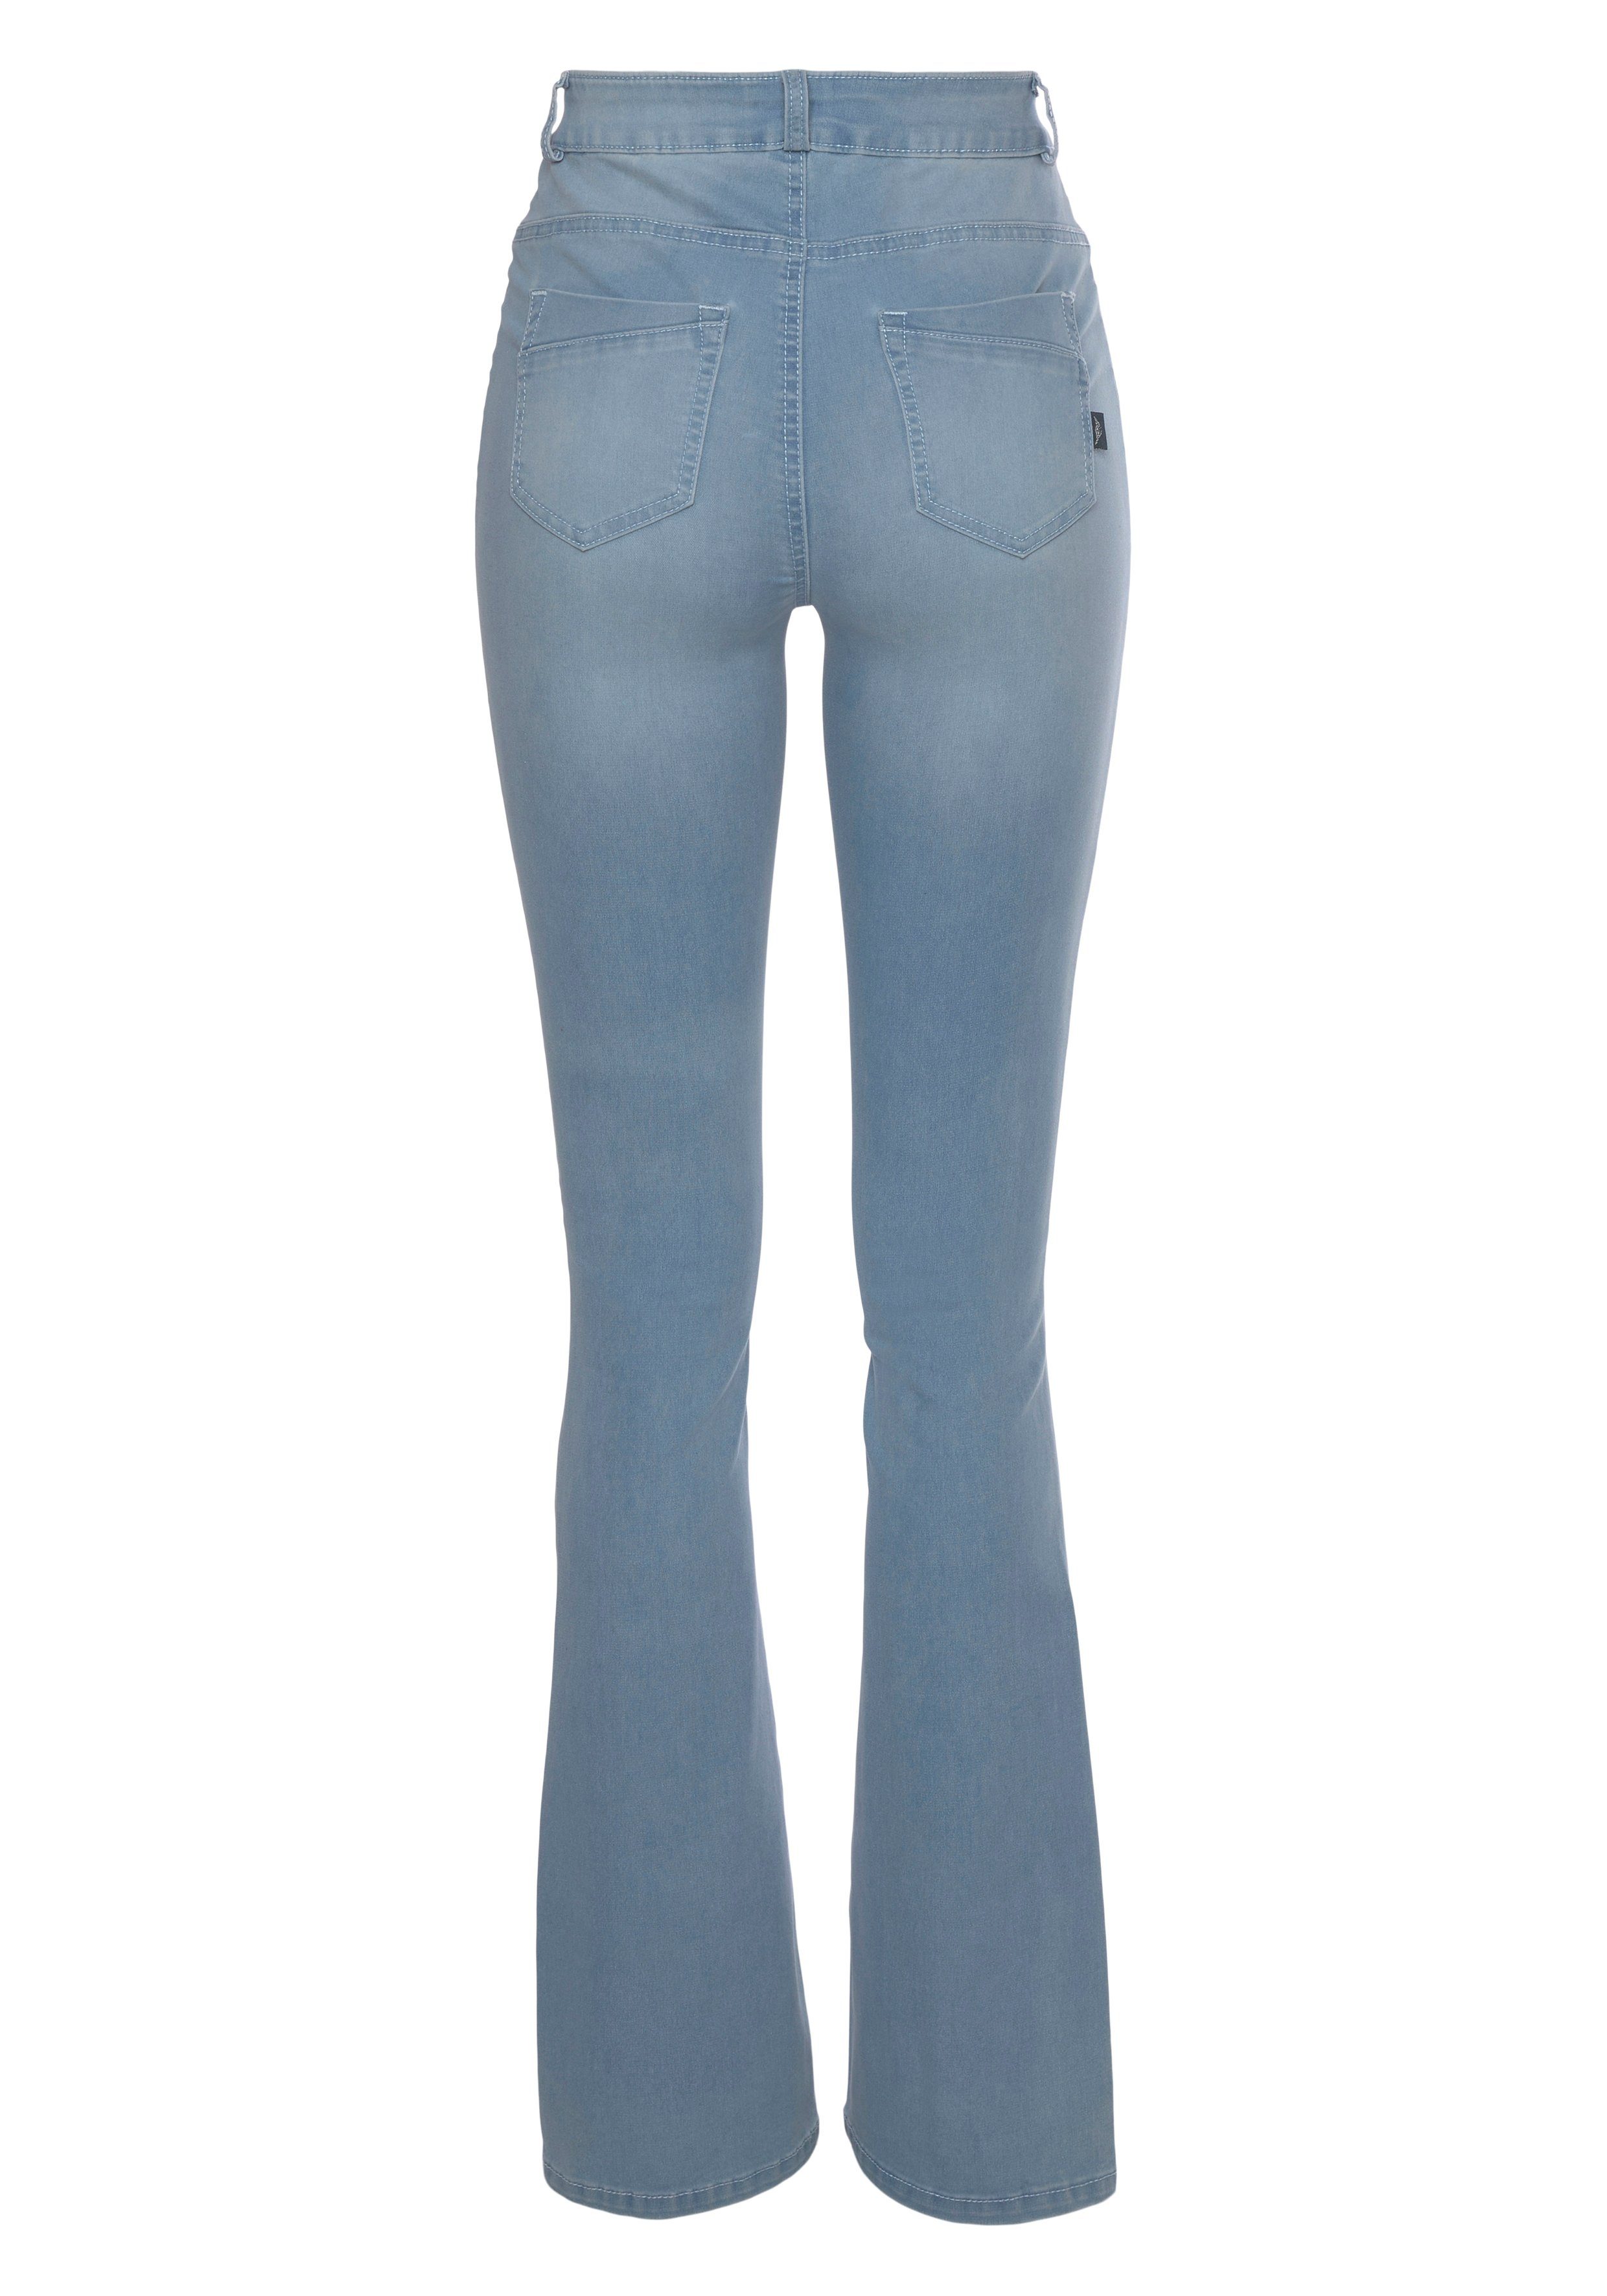 Waist Bootcut-Jeans Shapingnähten High Ultra bleached Stretch Arizona mit